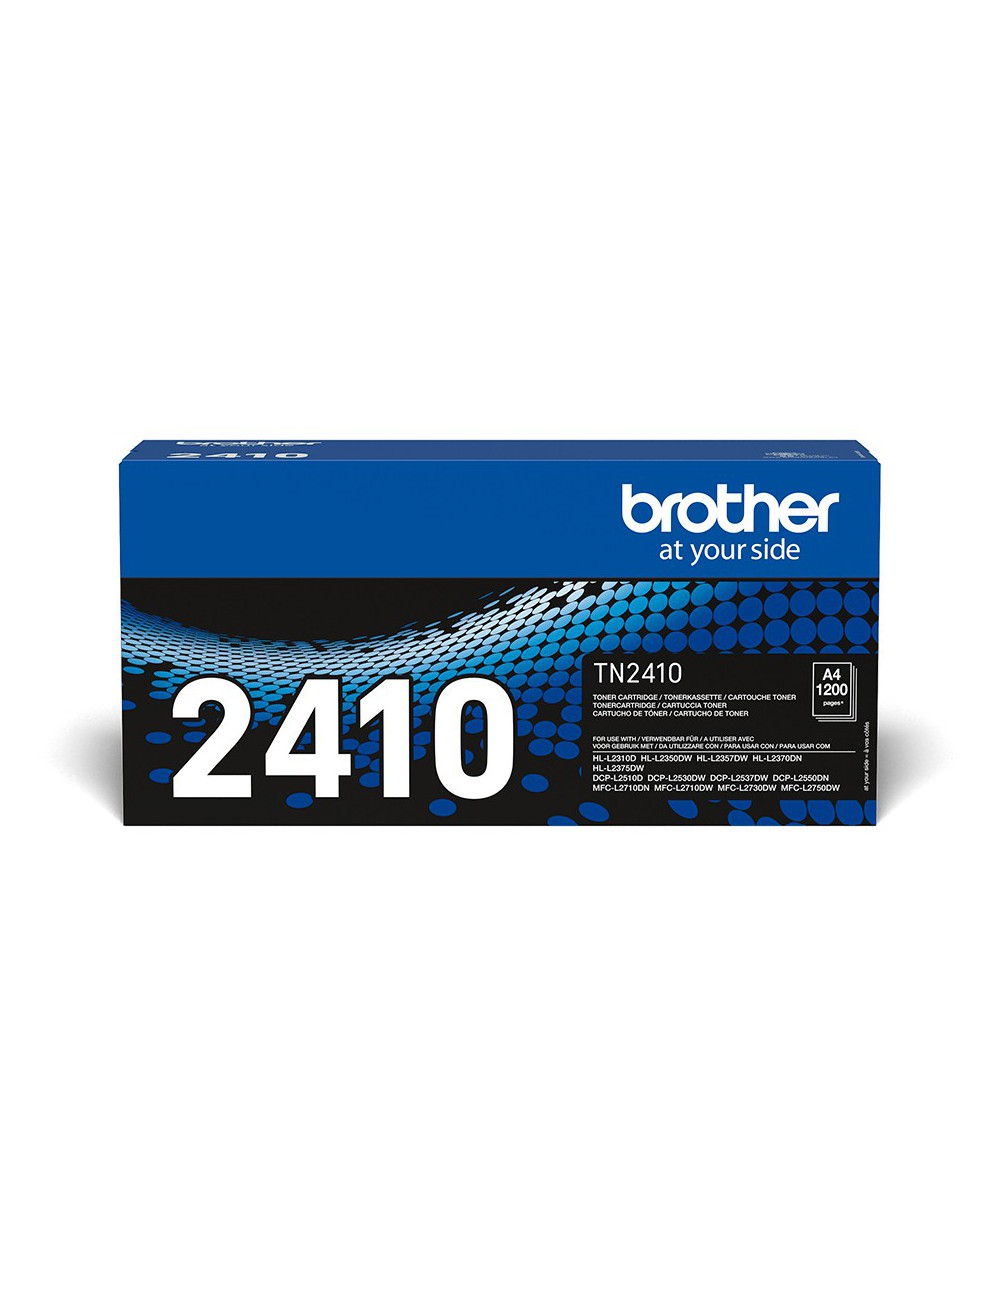 Brother TN-2410 cartuccia toner 1 pz Originale Nero